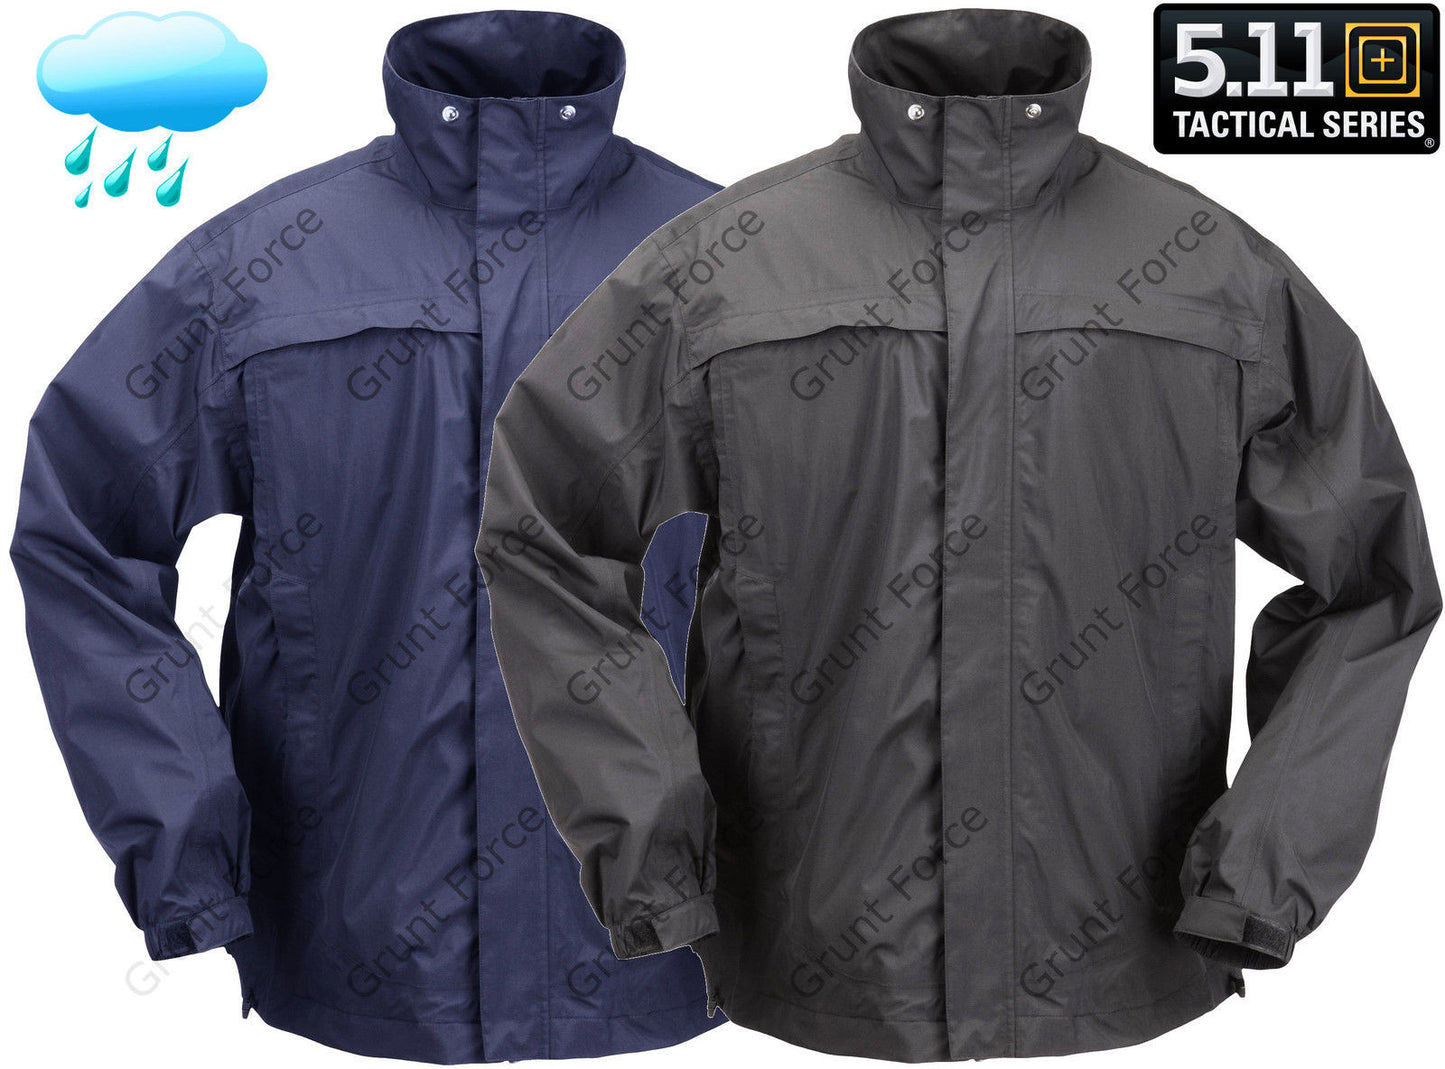 5.11 Tactical Dry Rain Shell Jacket - Black or Navy Waterproof Lightweight Coat